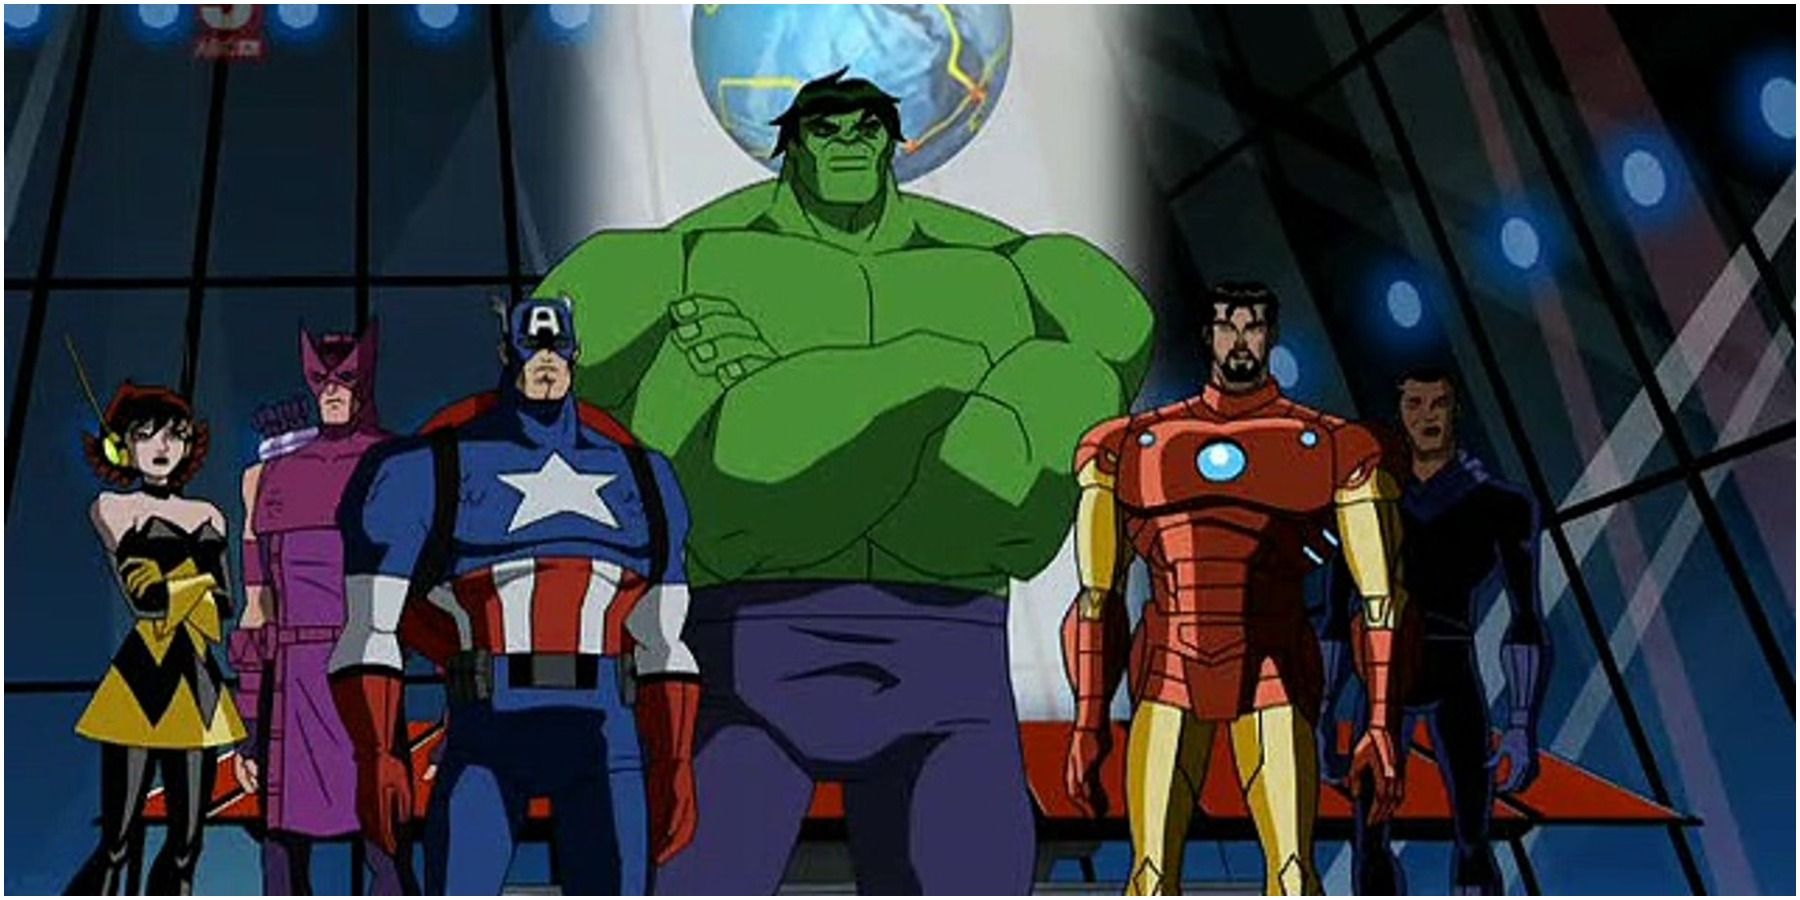 Wasp, Hawkeye, Capt America, Hulk, Iron Man and Black Panther